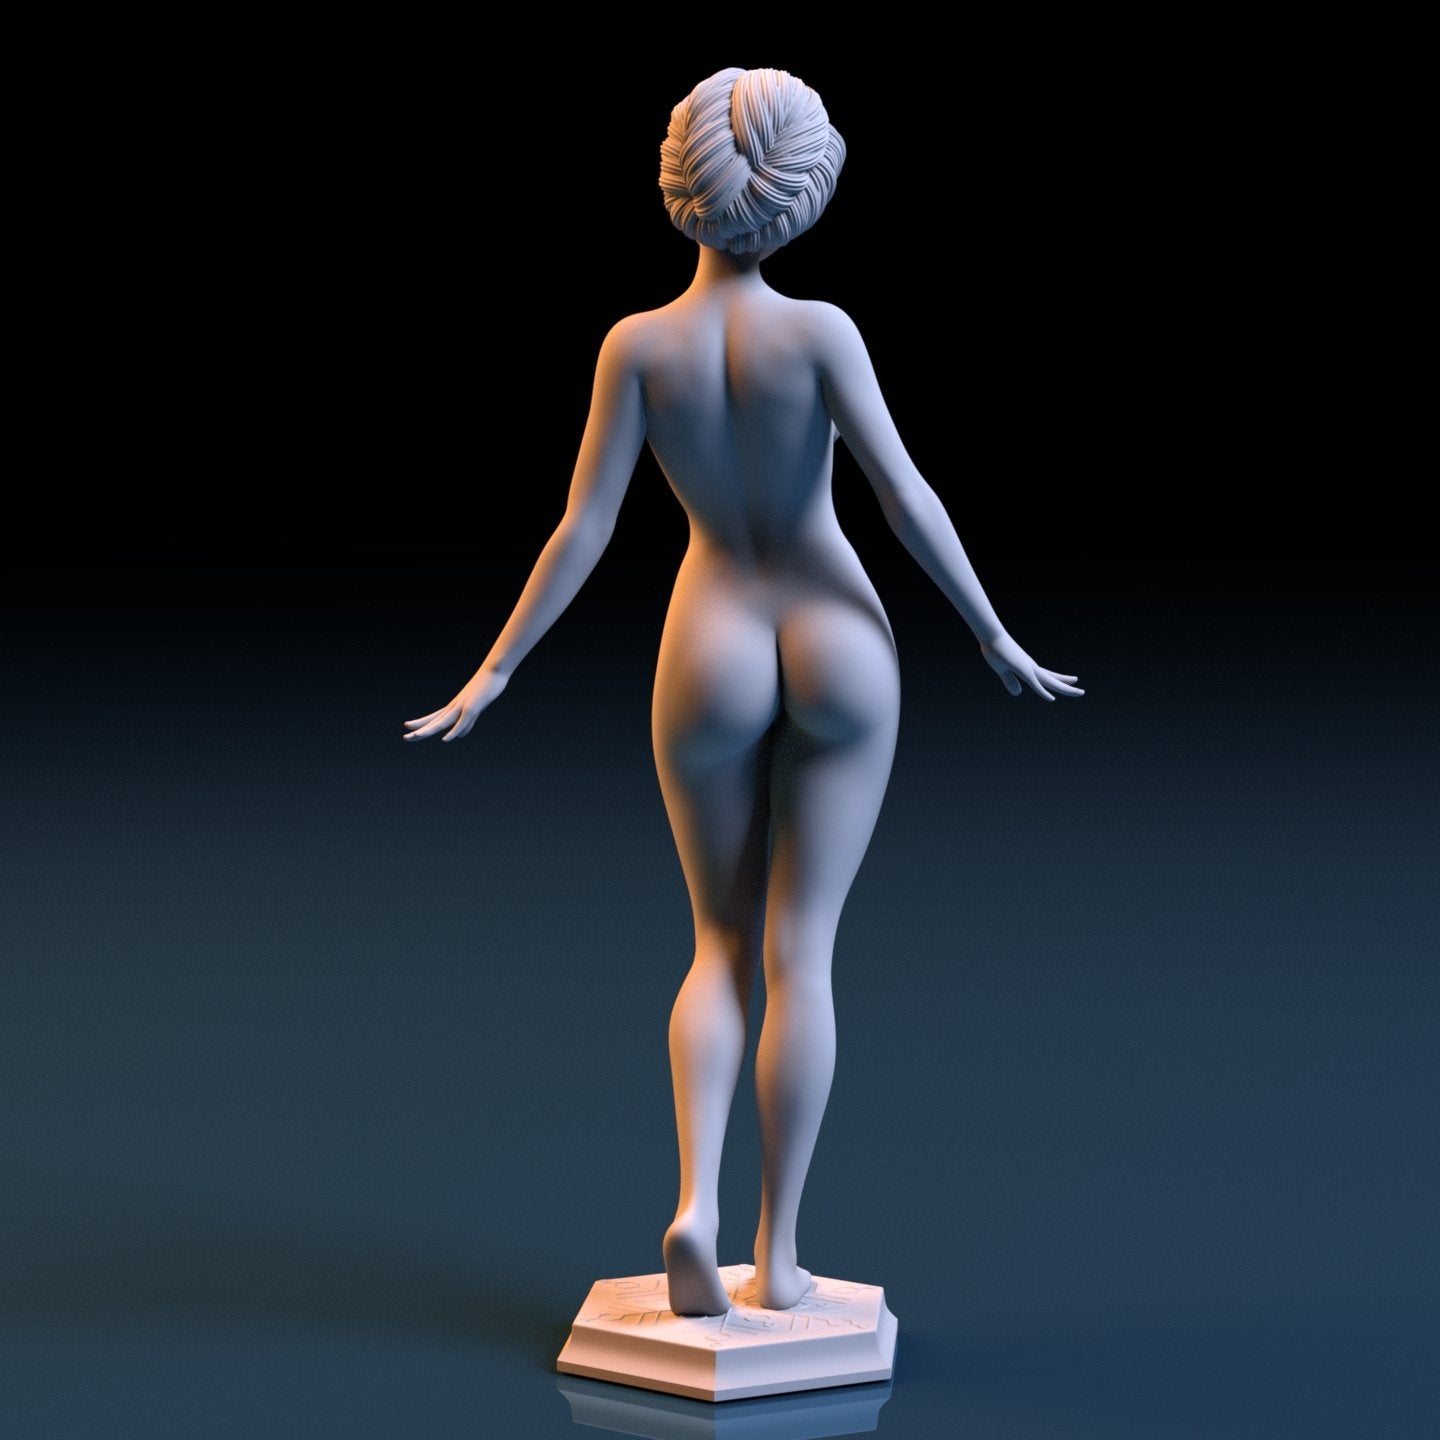 Princess Anna 4 NSFW 3D Printed Figurine Fanart Unpainted Miniature